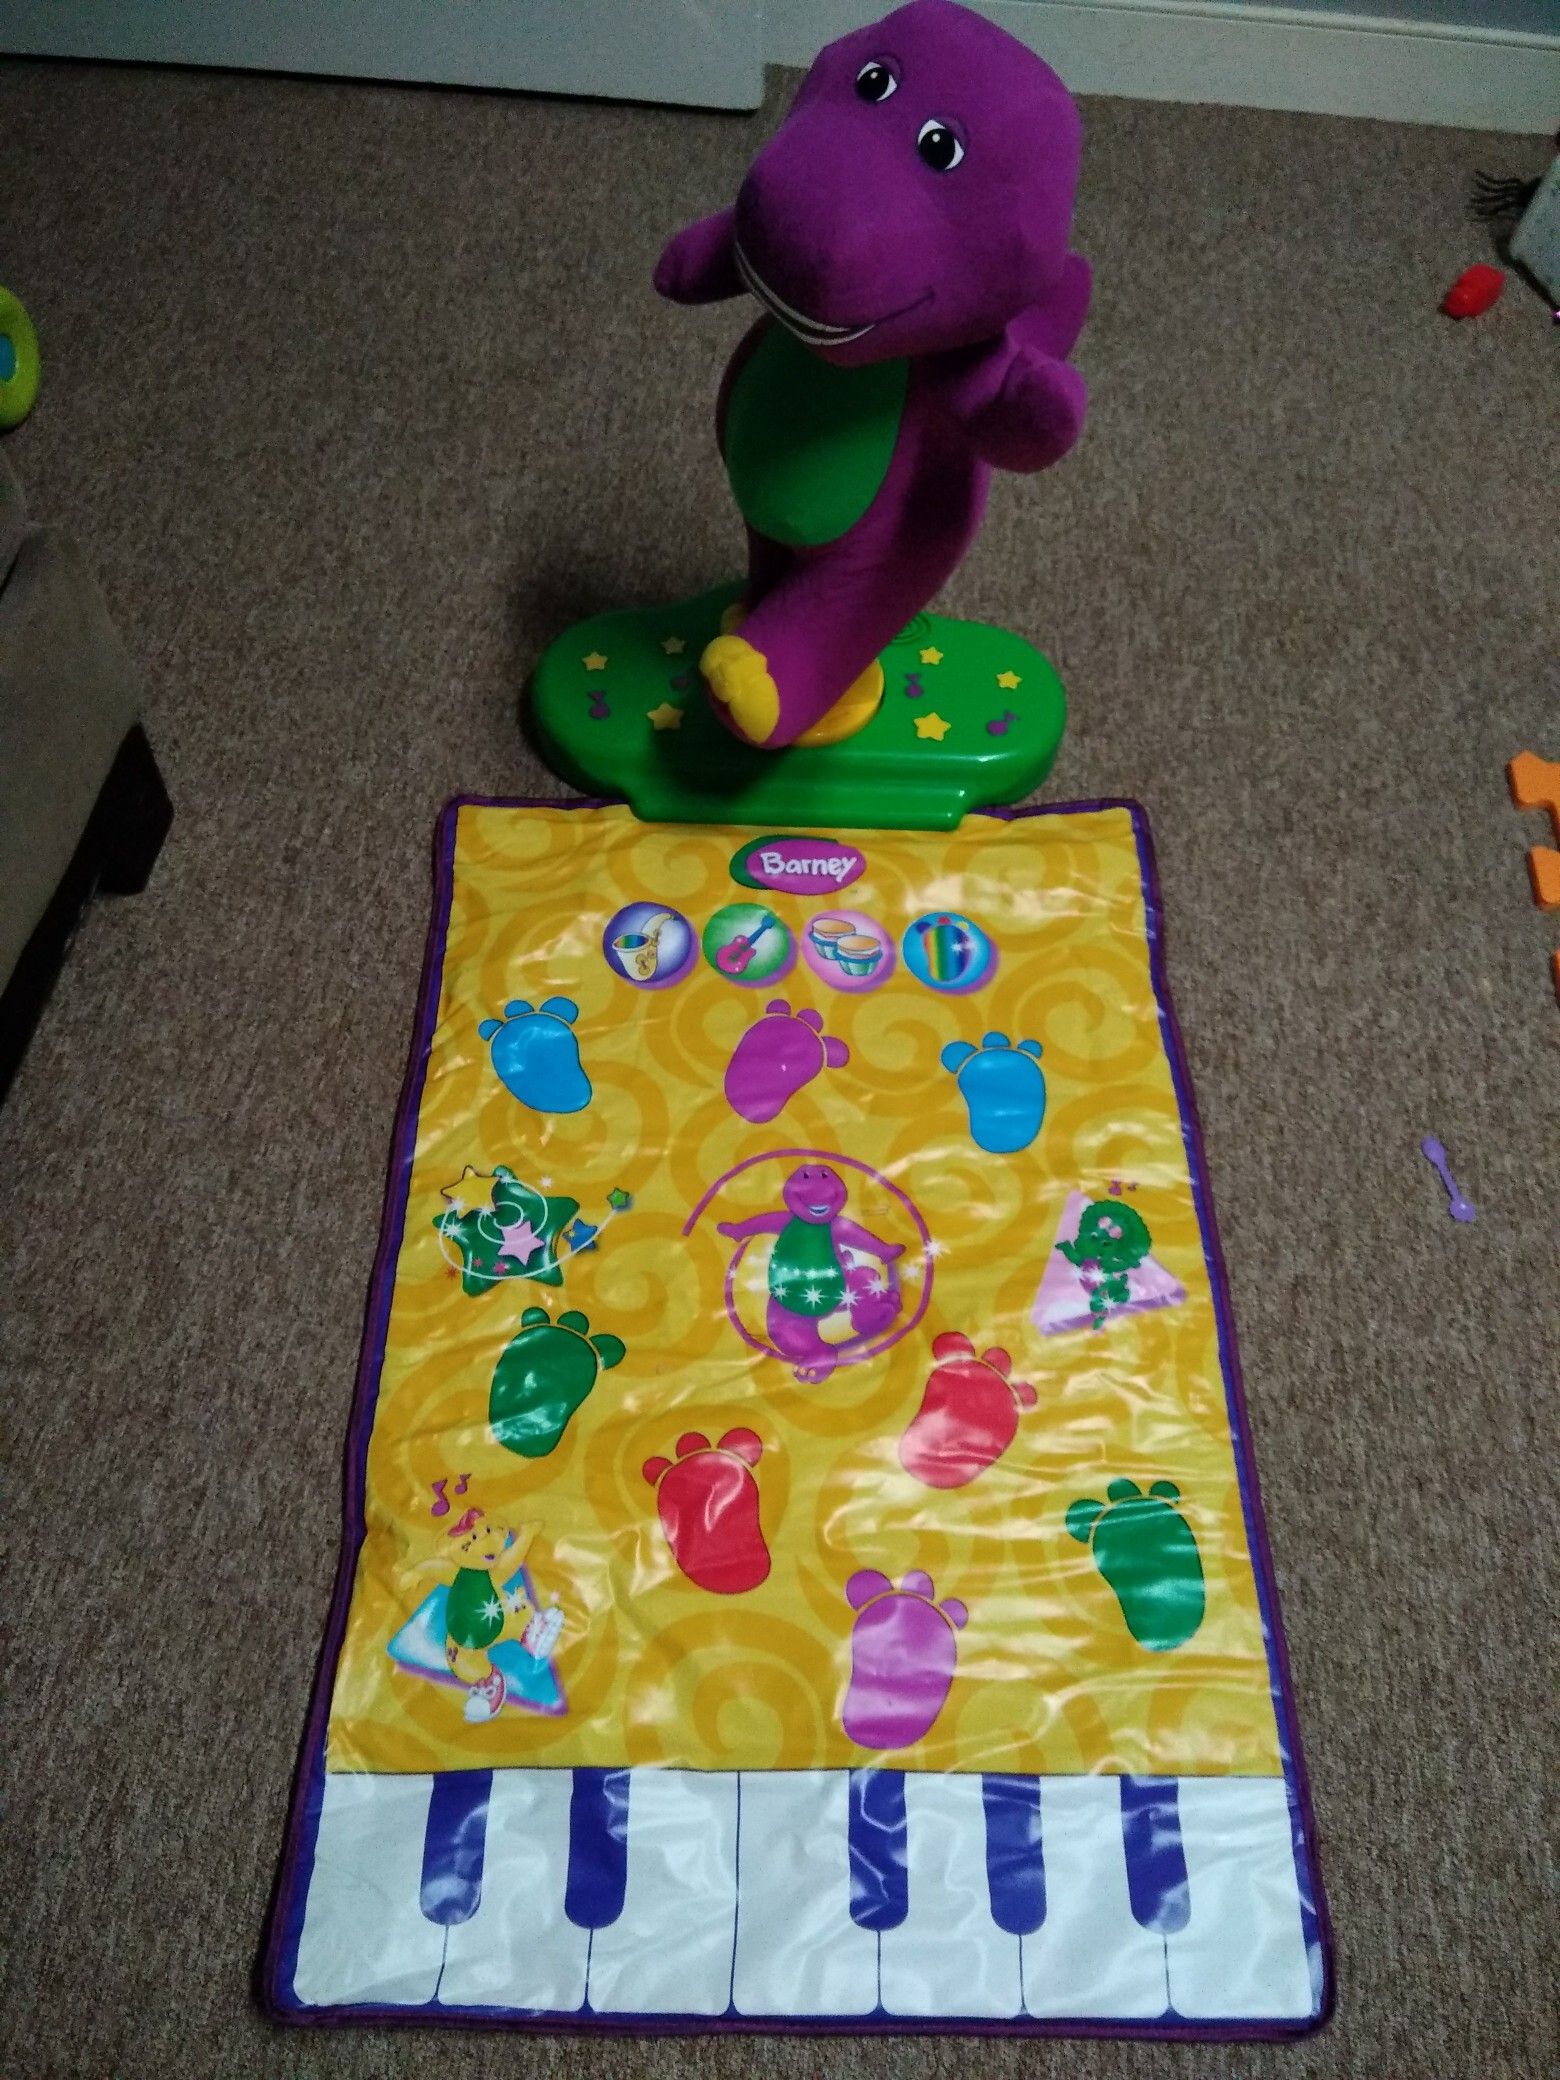 Barney step toy